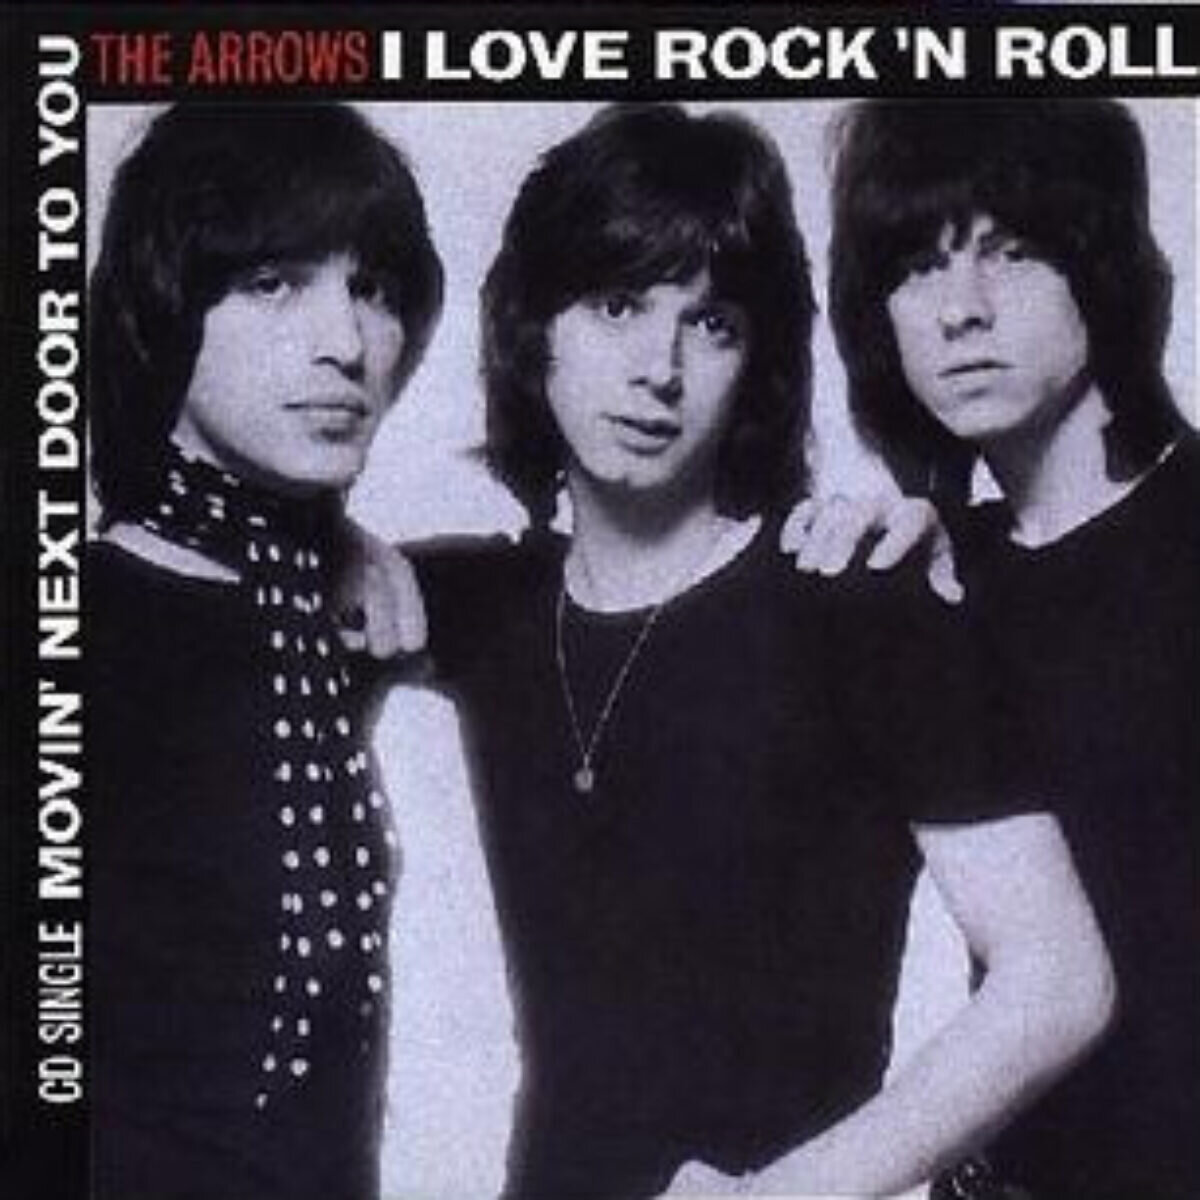 I rock n roll. The arrows группа. The arrows i Love Rock and Roll. I Love Rock'n'Roll arrows. Love рок группа.